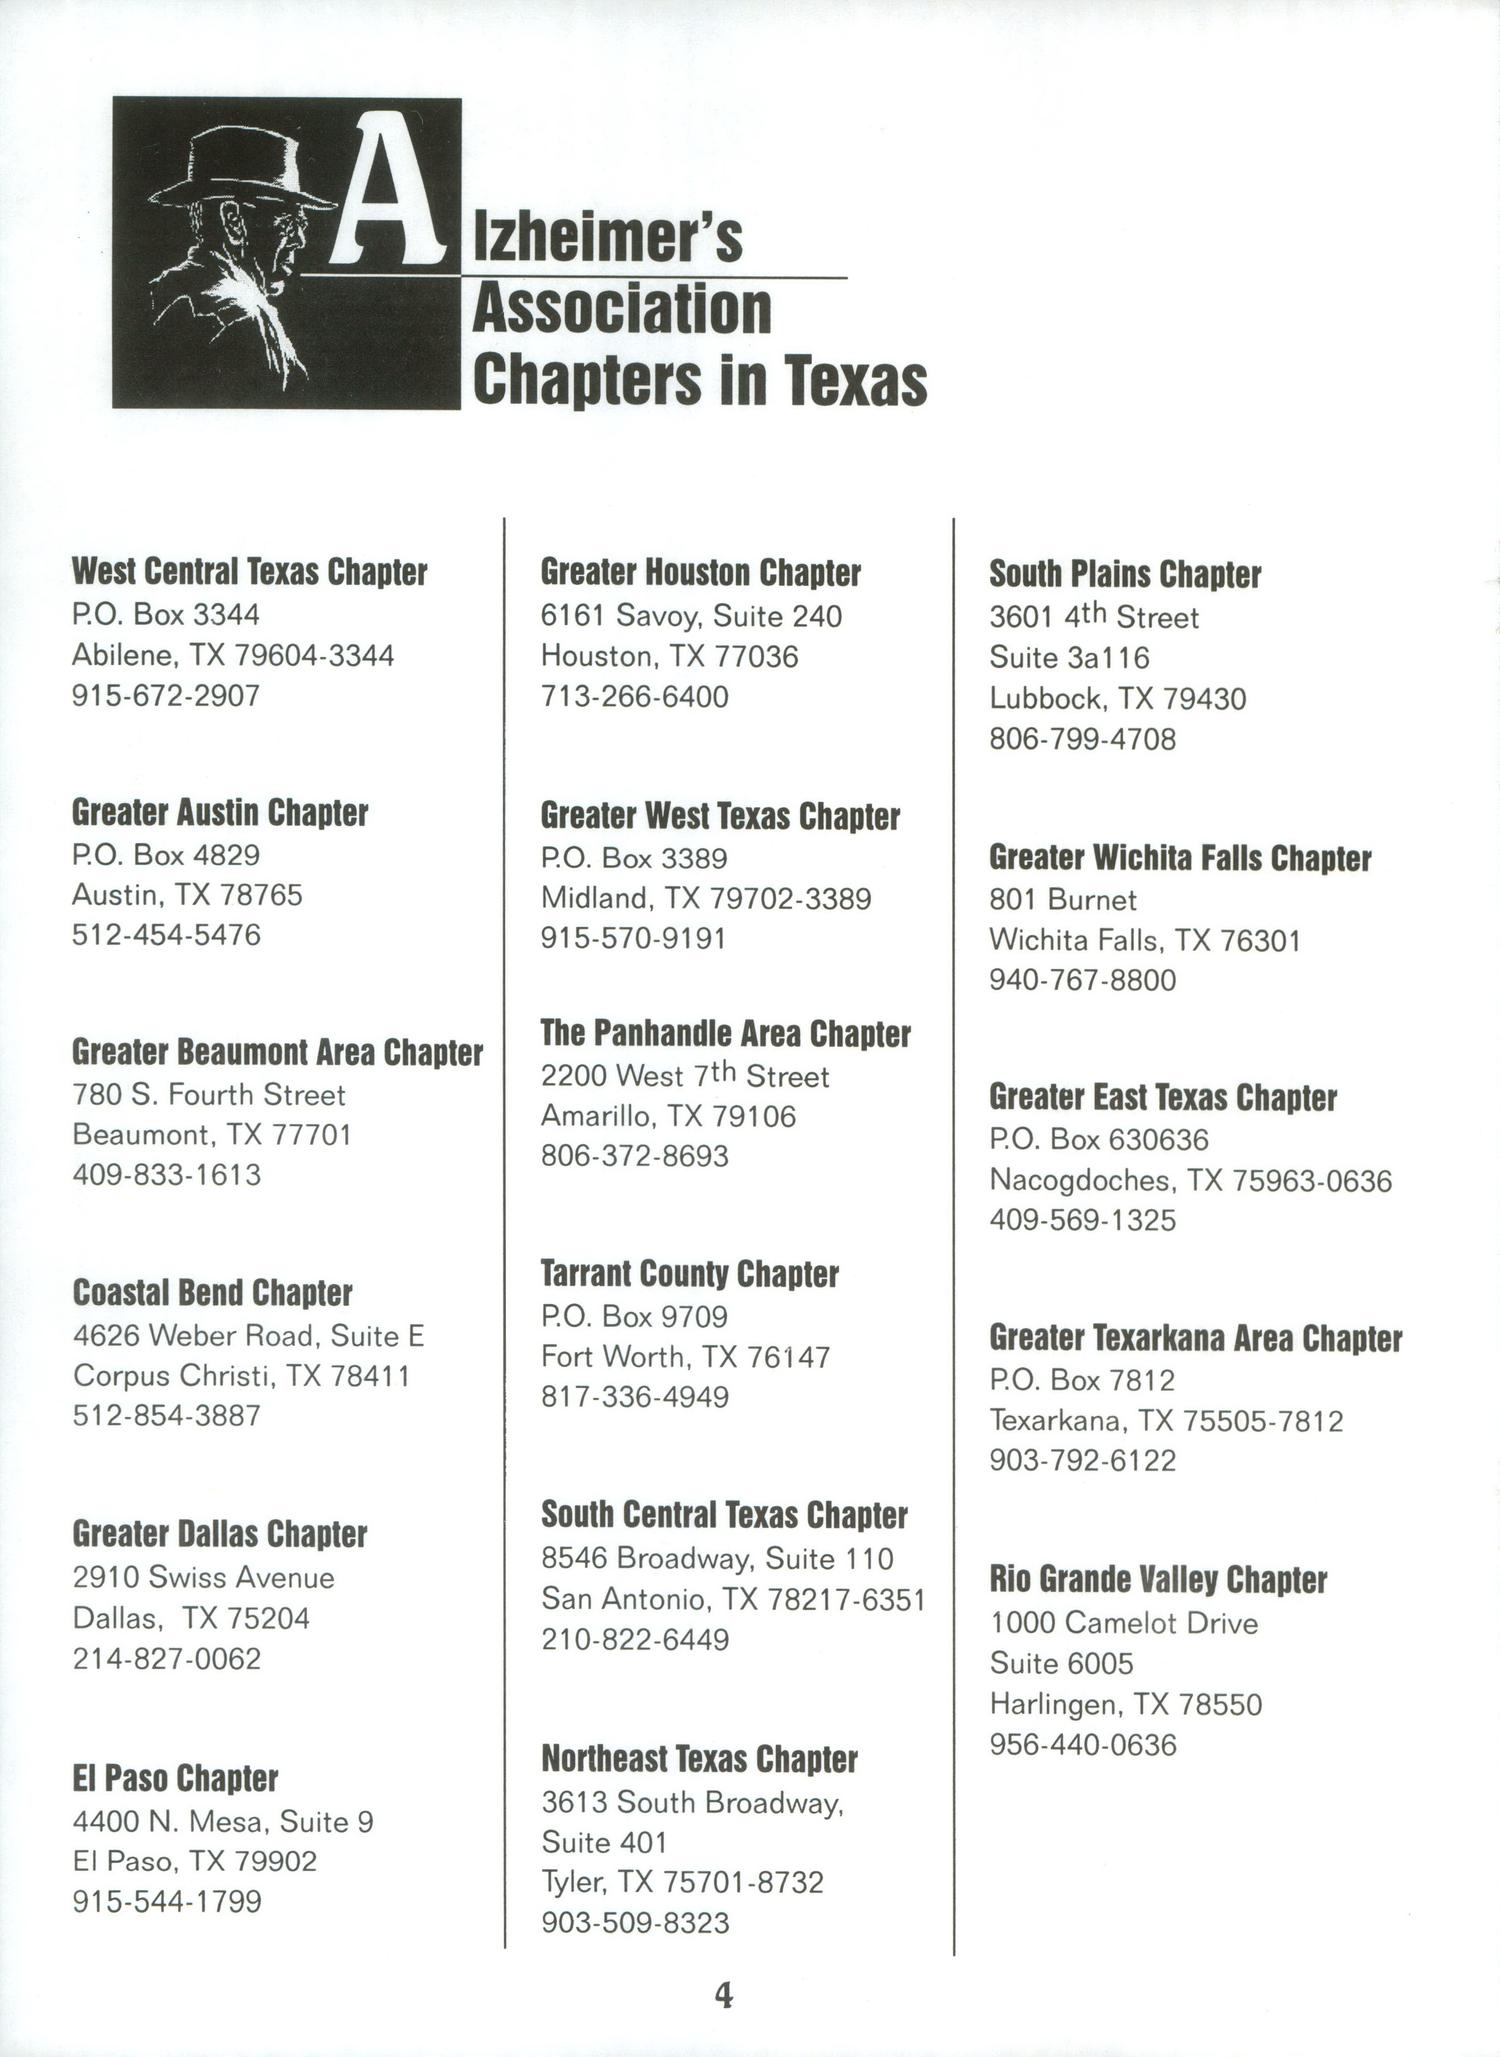 Texas Alzheimer's News, Volume 1, Number 1, Winter 1999
                                                
                                                    4
                                                